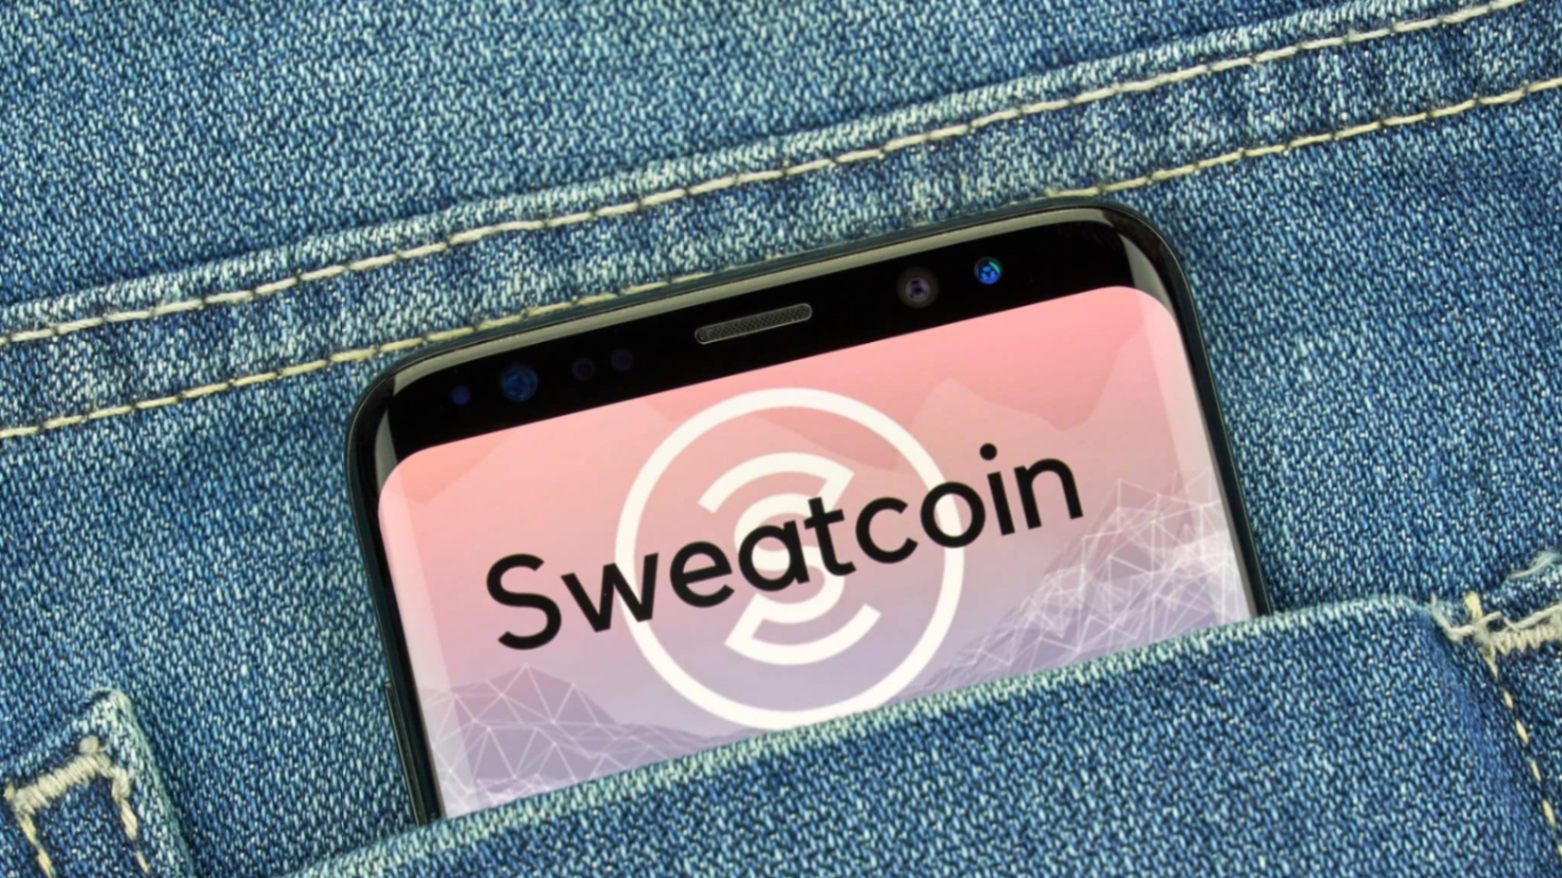 Sweatcoin - Descubra como se cadastrar para ganhar moedas virtuais